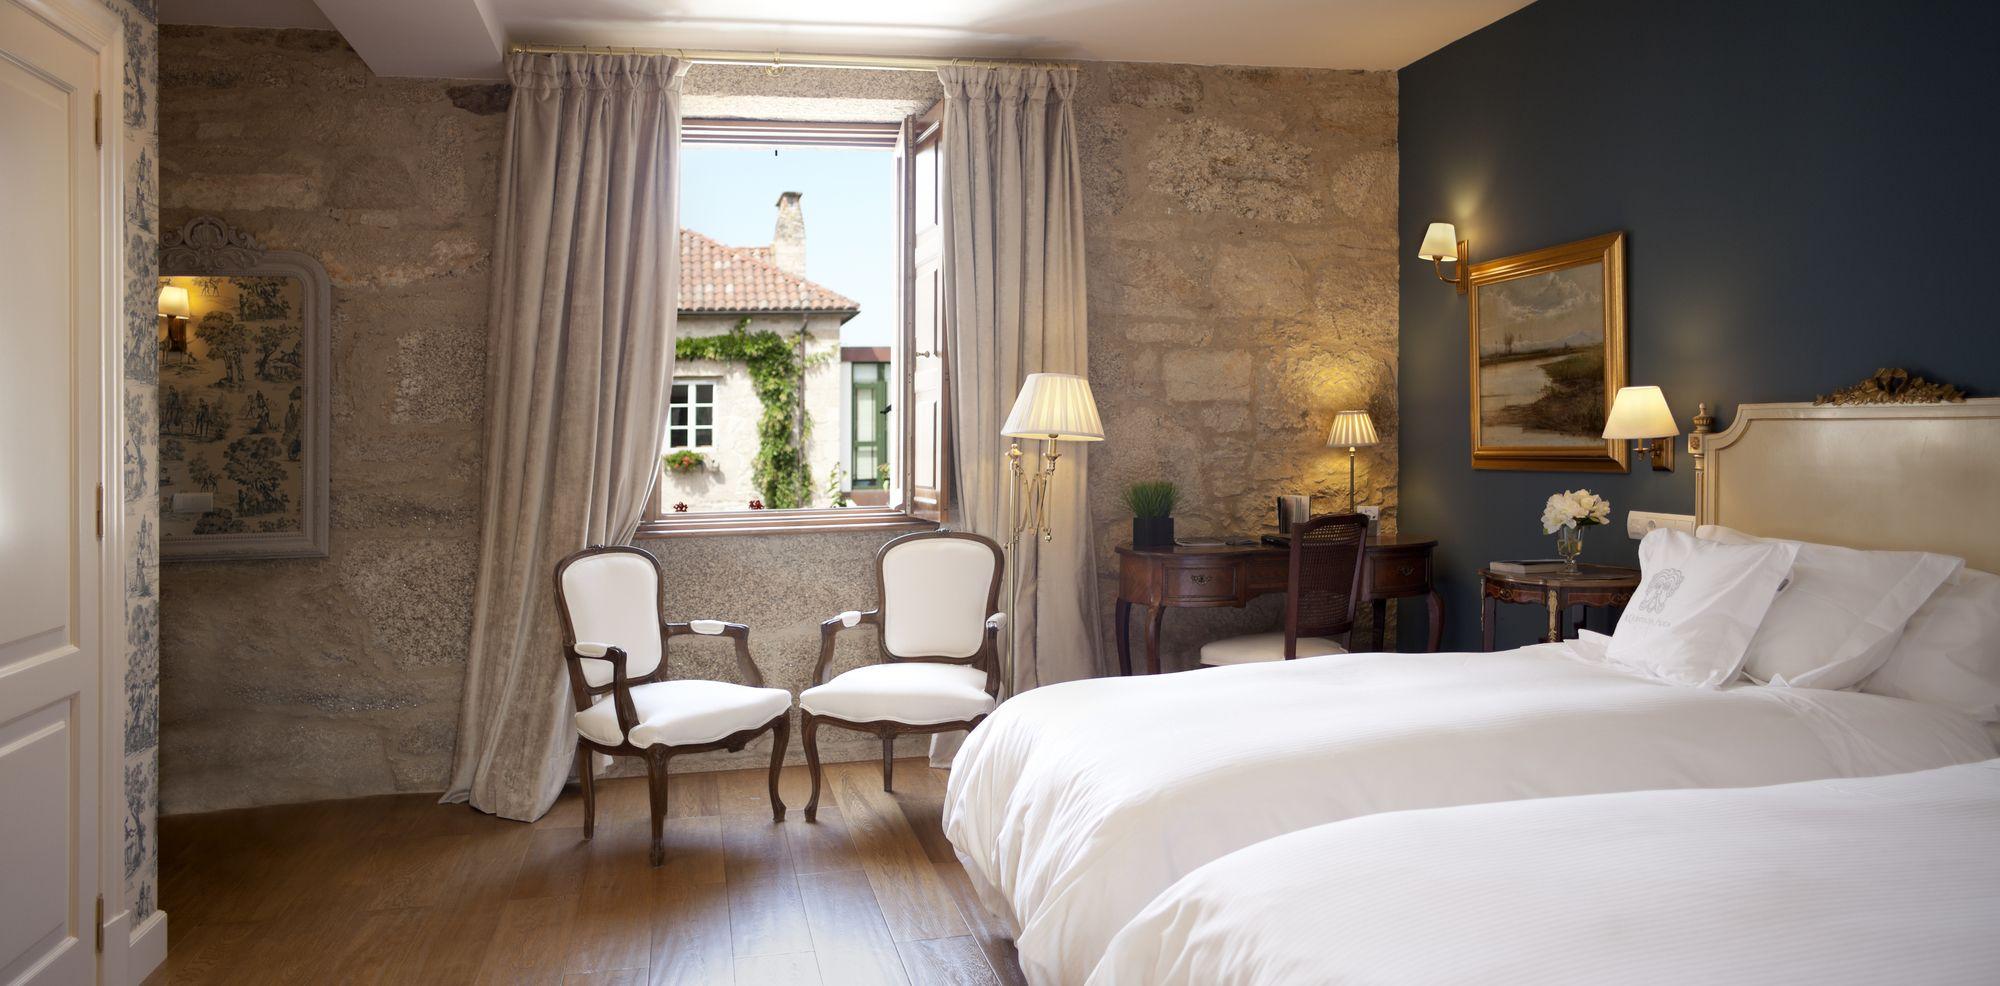 Quarto Hotel Spa Relais & Chateaux A Quinta da Auga